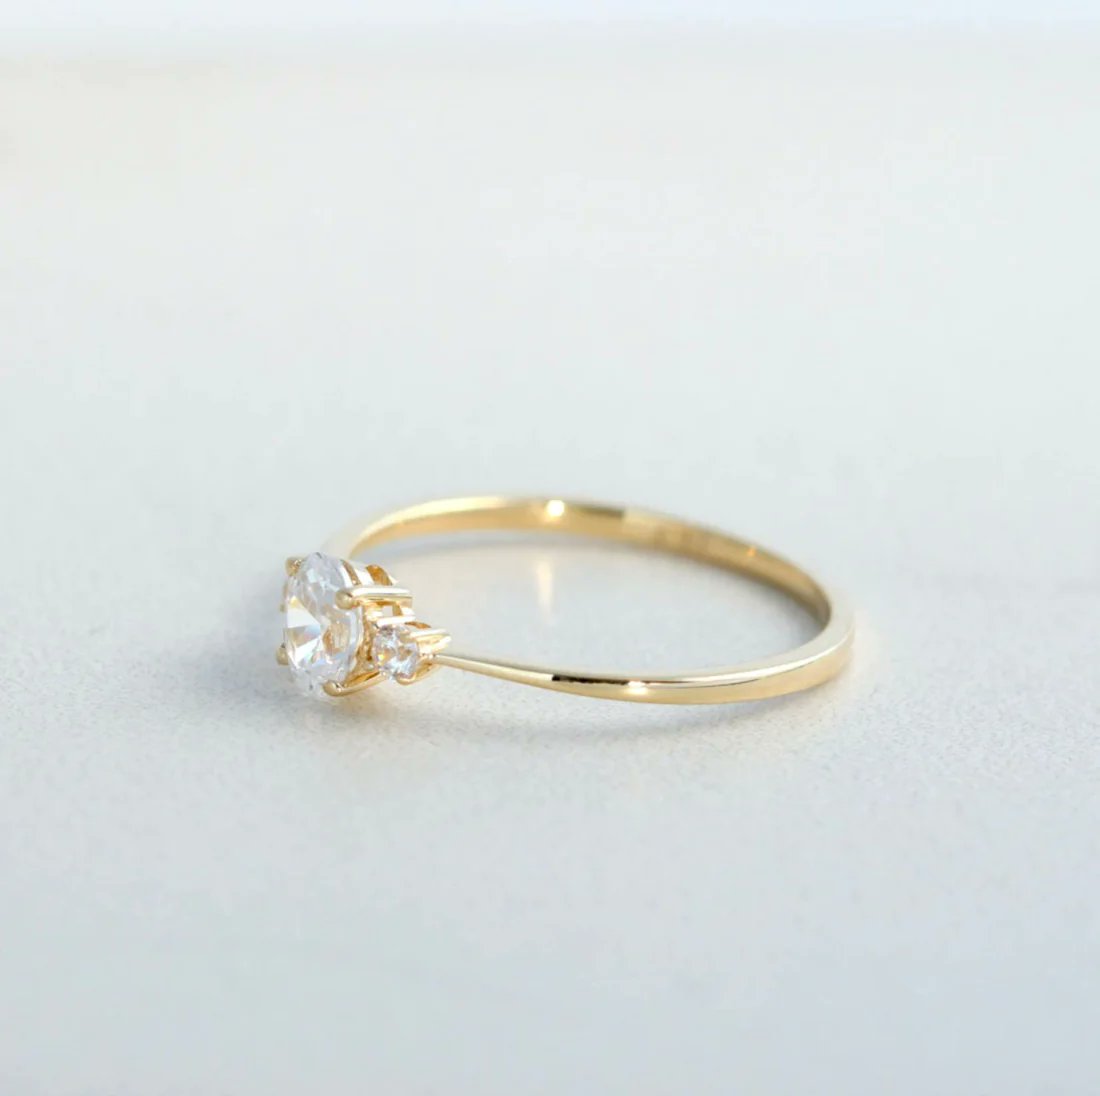 vicstonenyc.com/products/14k-g…

#weddingrings #rings #goldrings #diamondrings #engagementring #gold #diamondweddingring